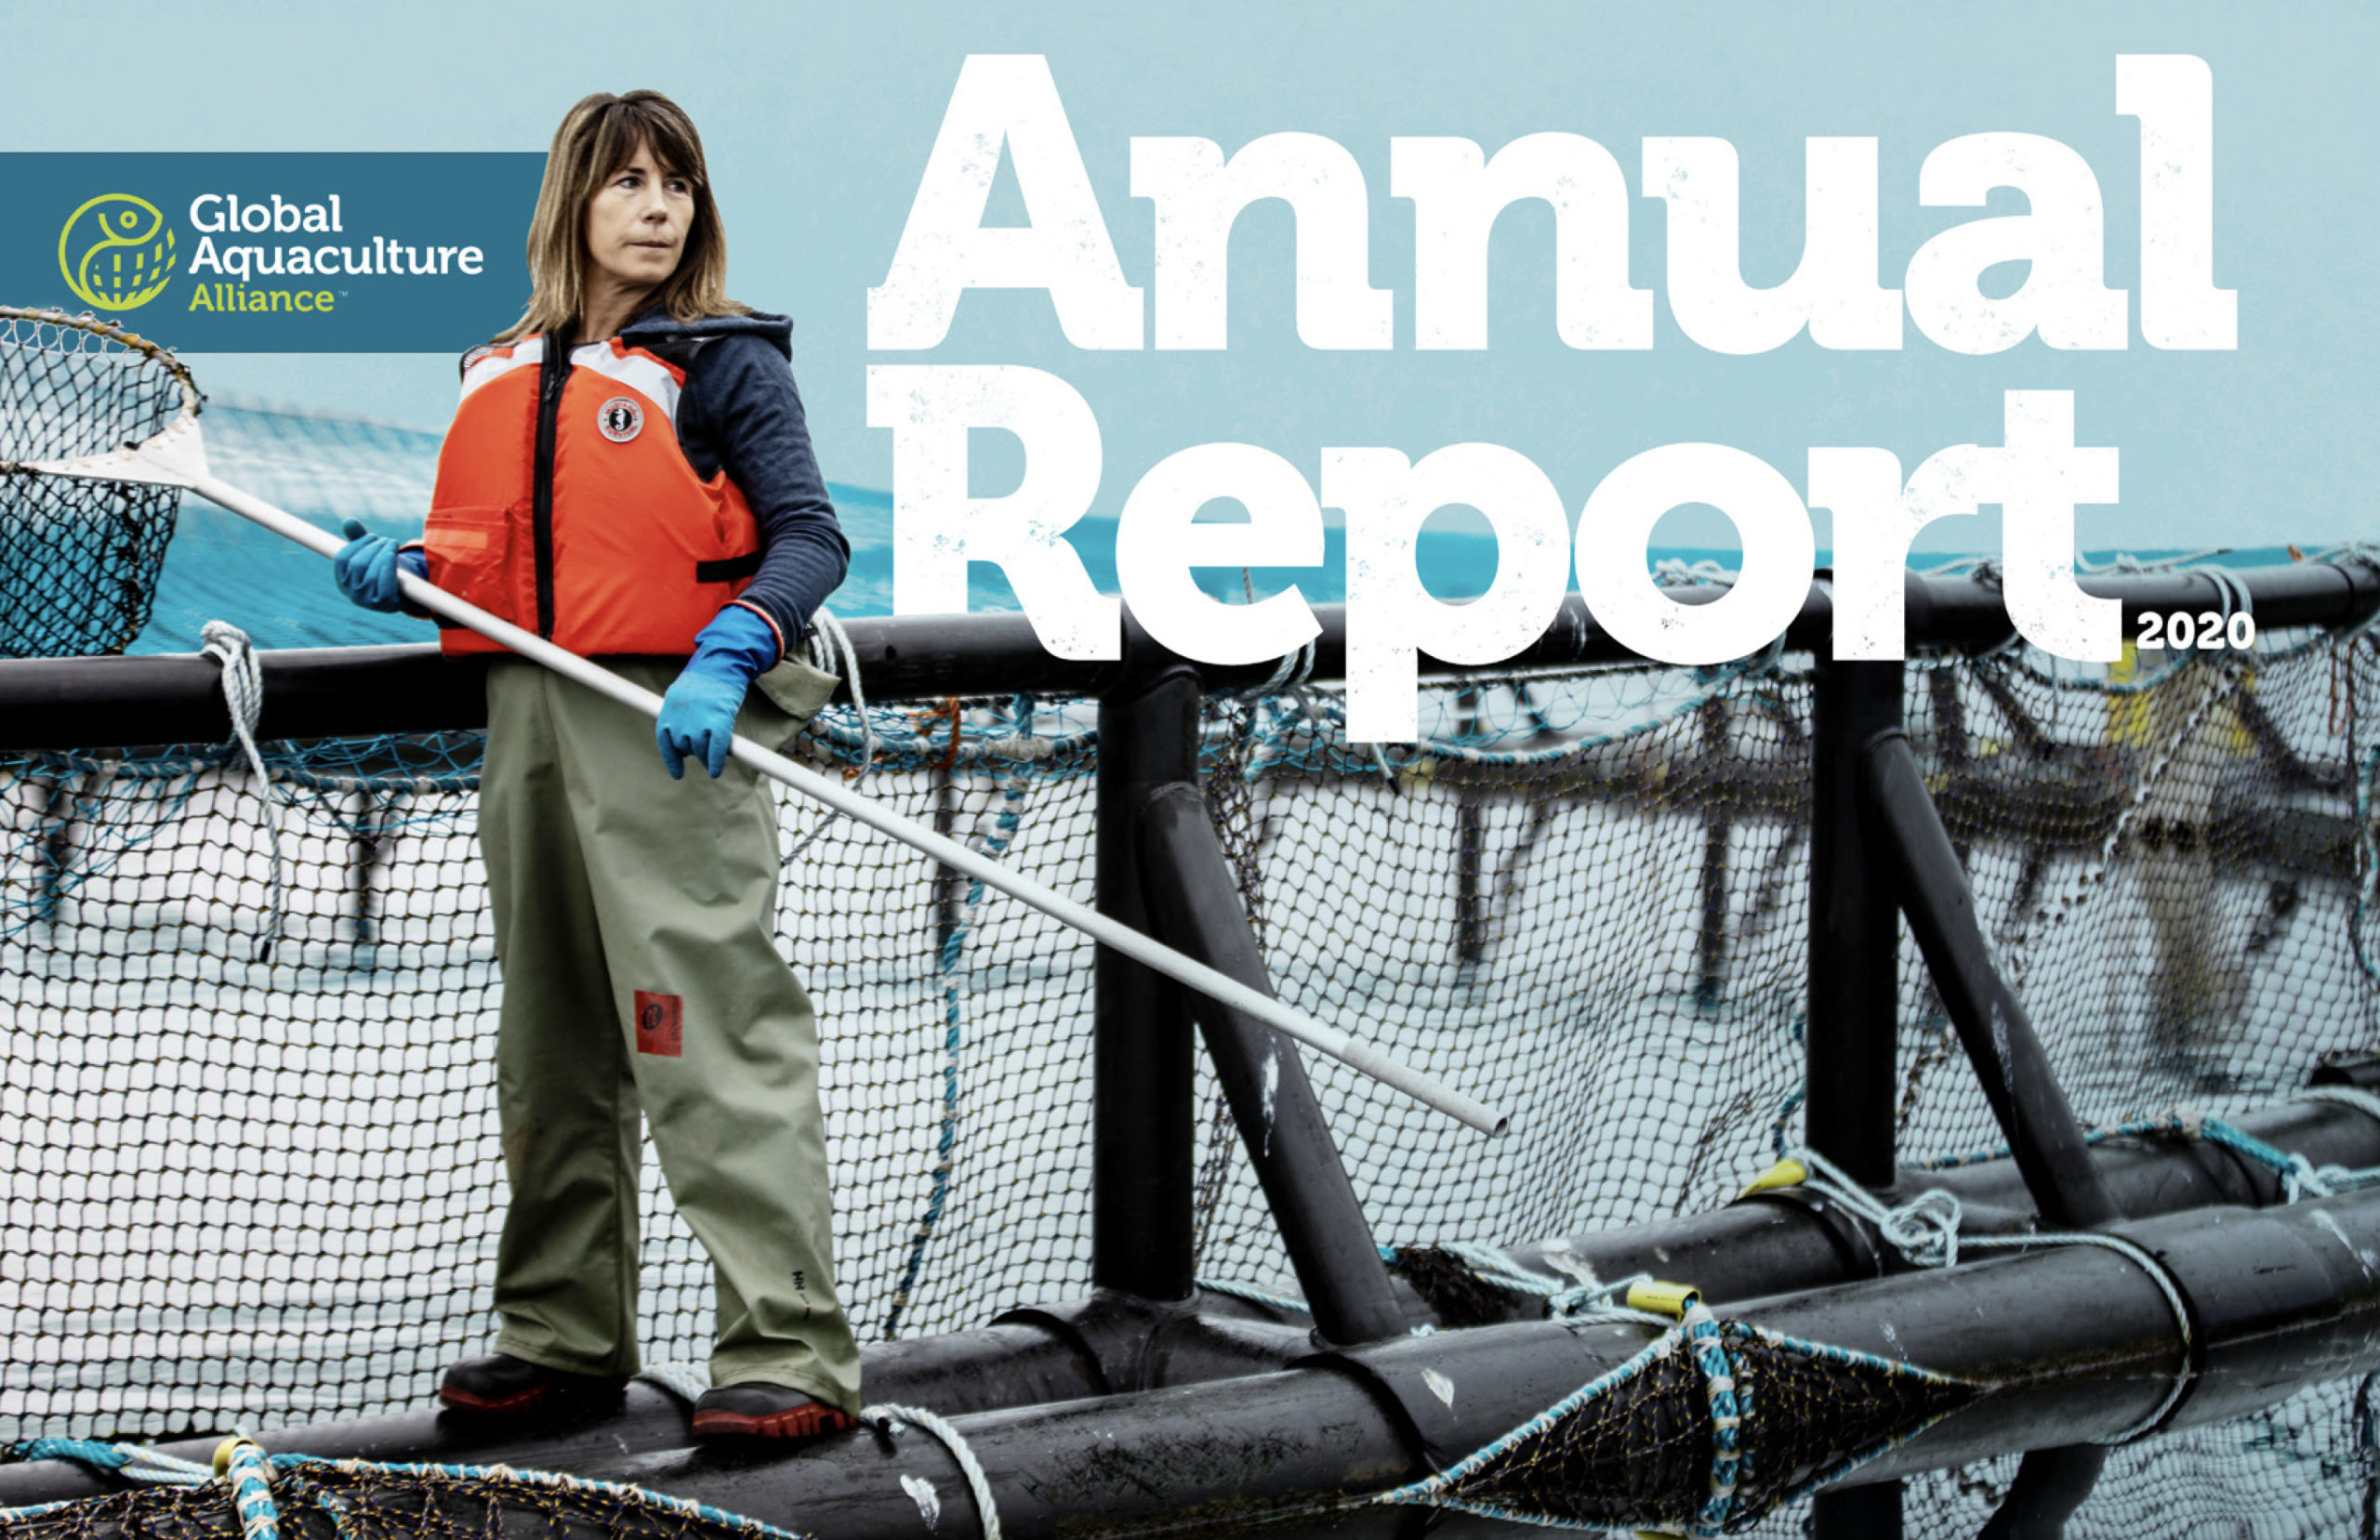 Global Aquaculture Alliance 2020 Annual Report